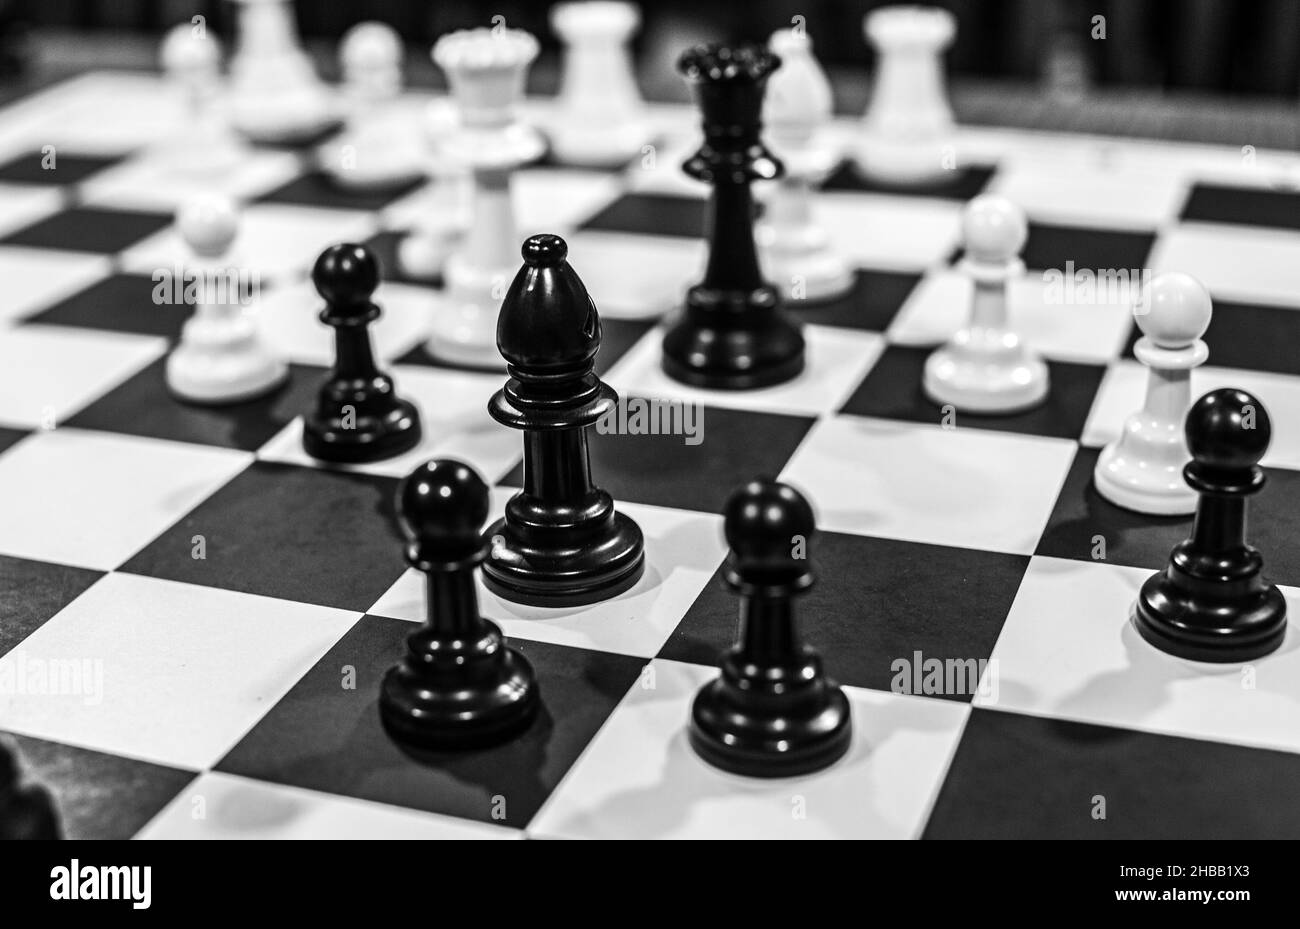 Chess Chessboard Game Stock Photo